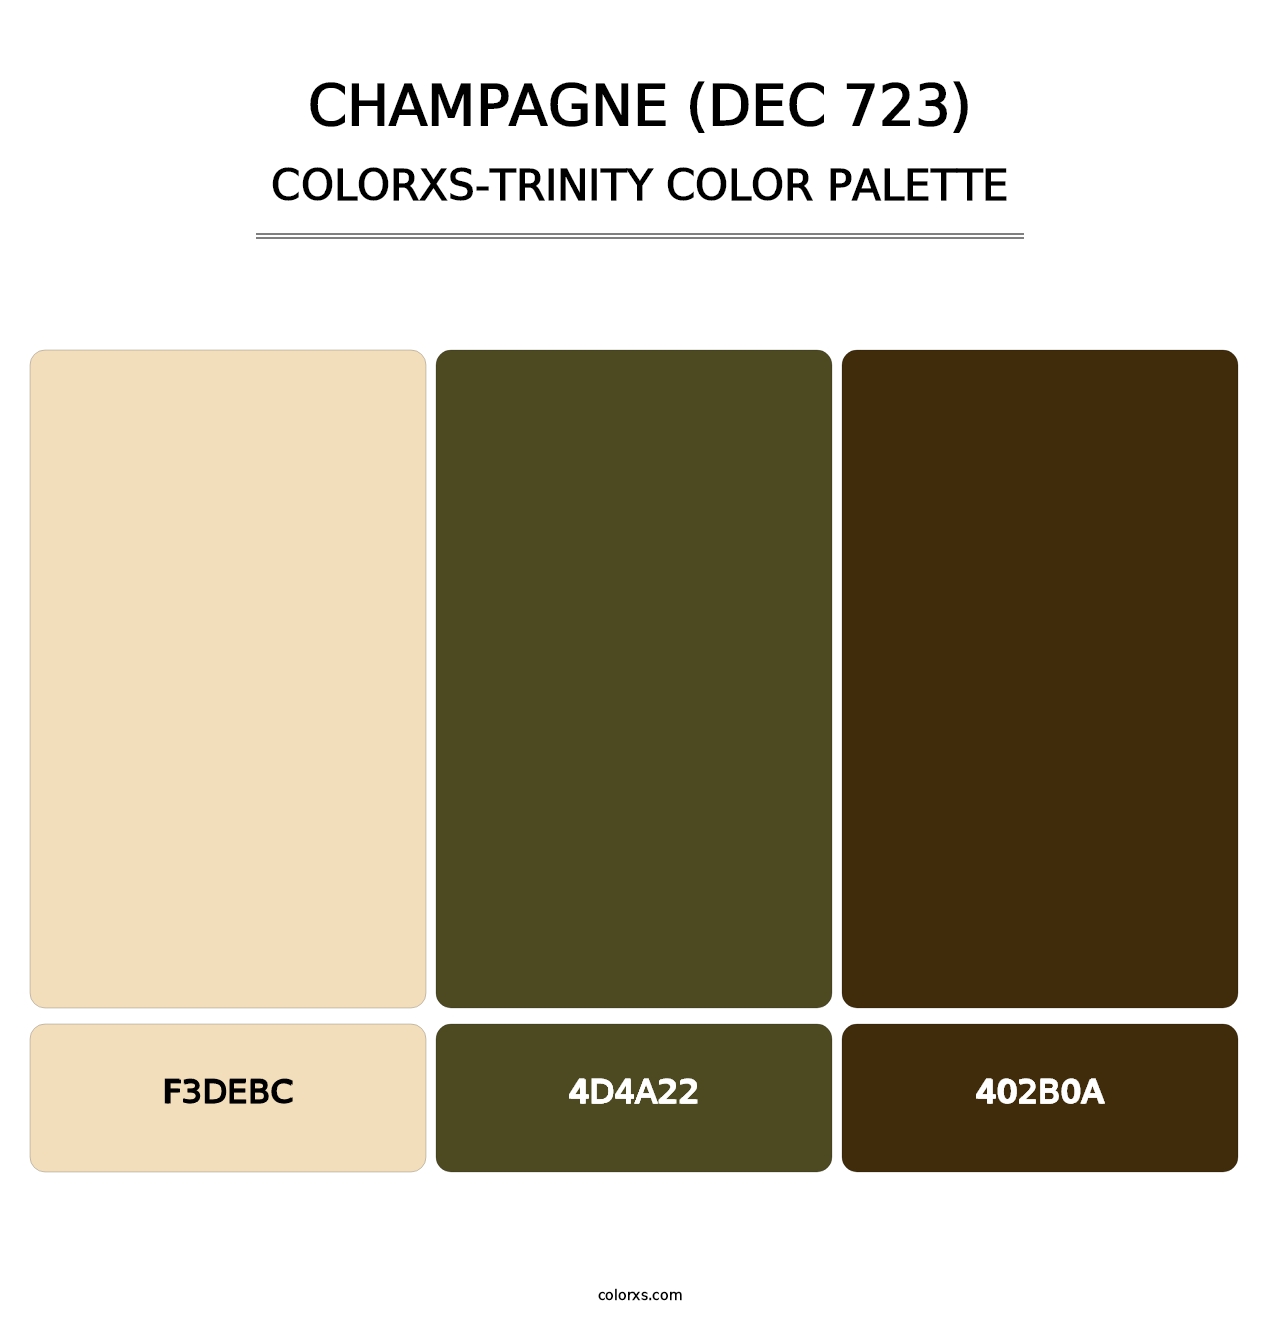 Champagne (DEC 723) - Colorxs Trinity Palette